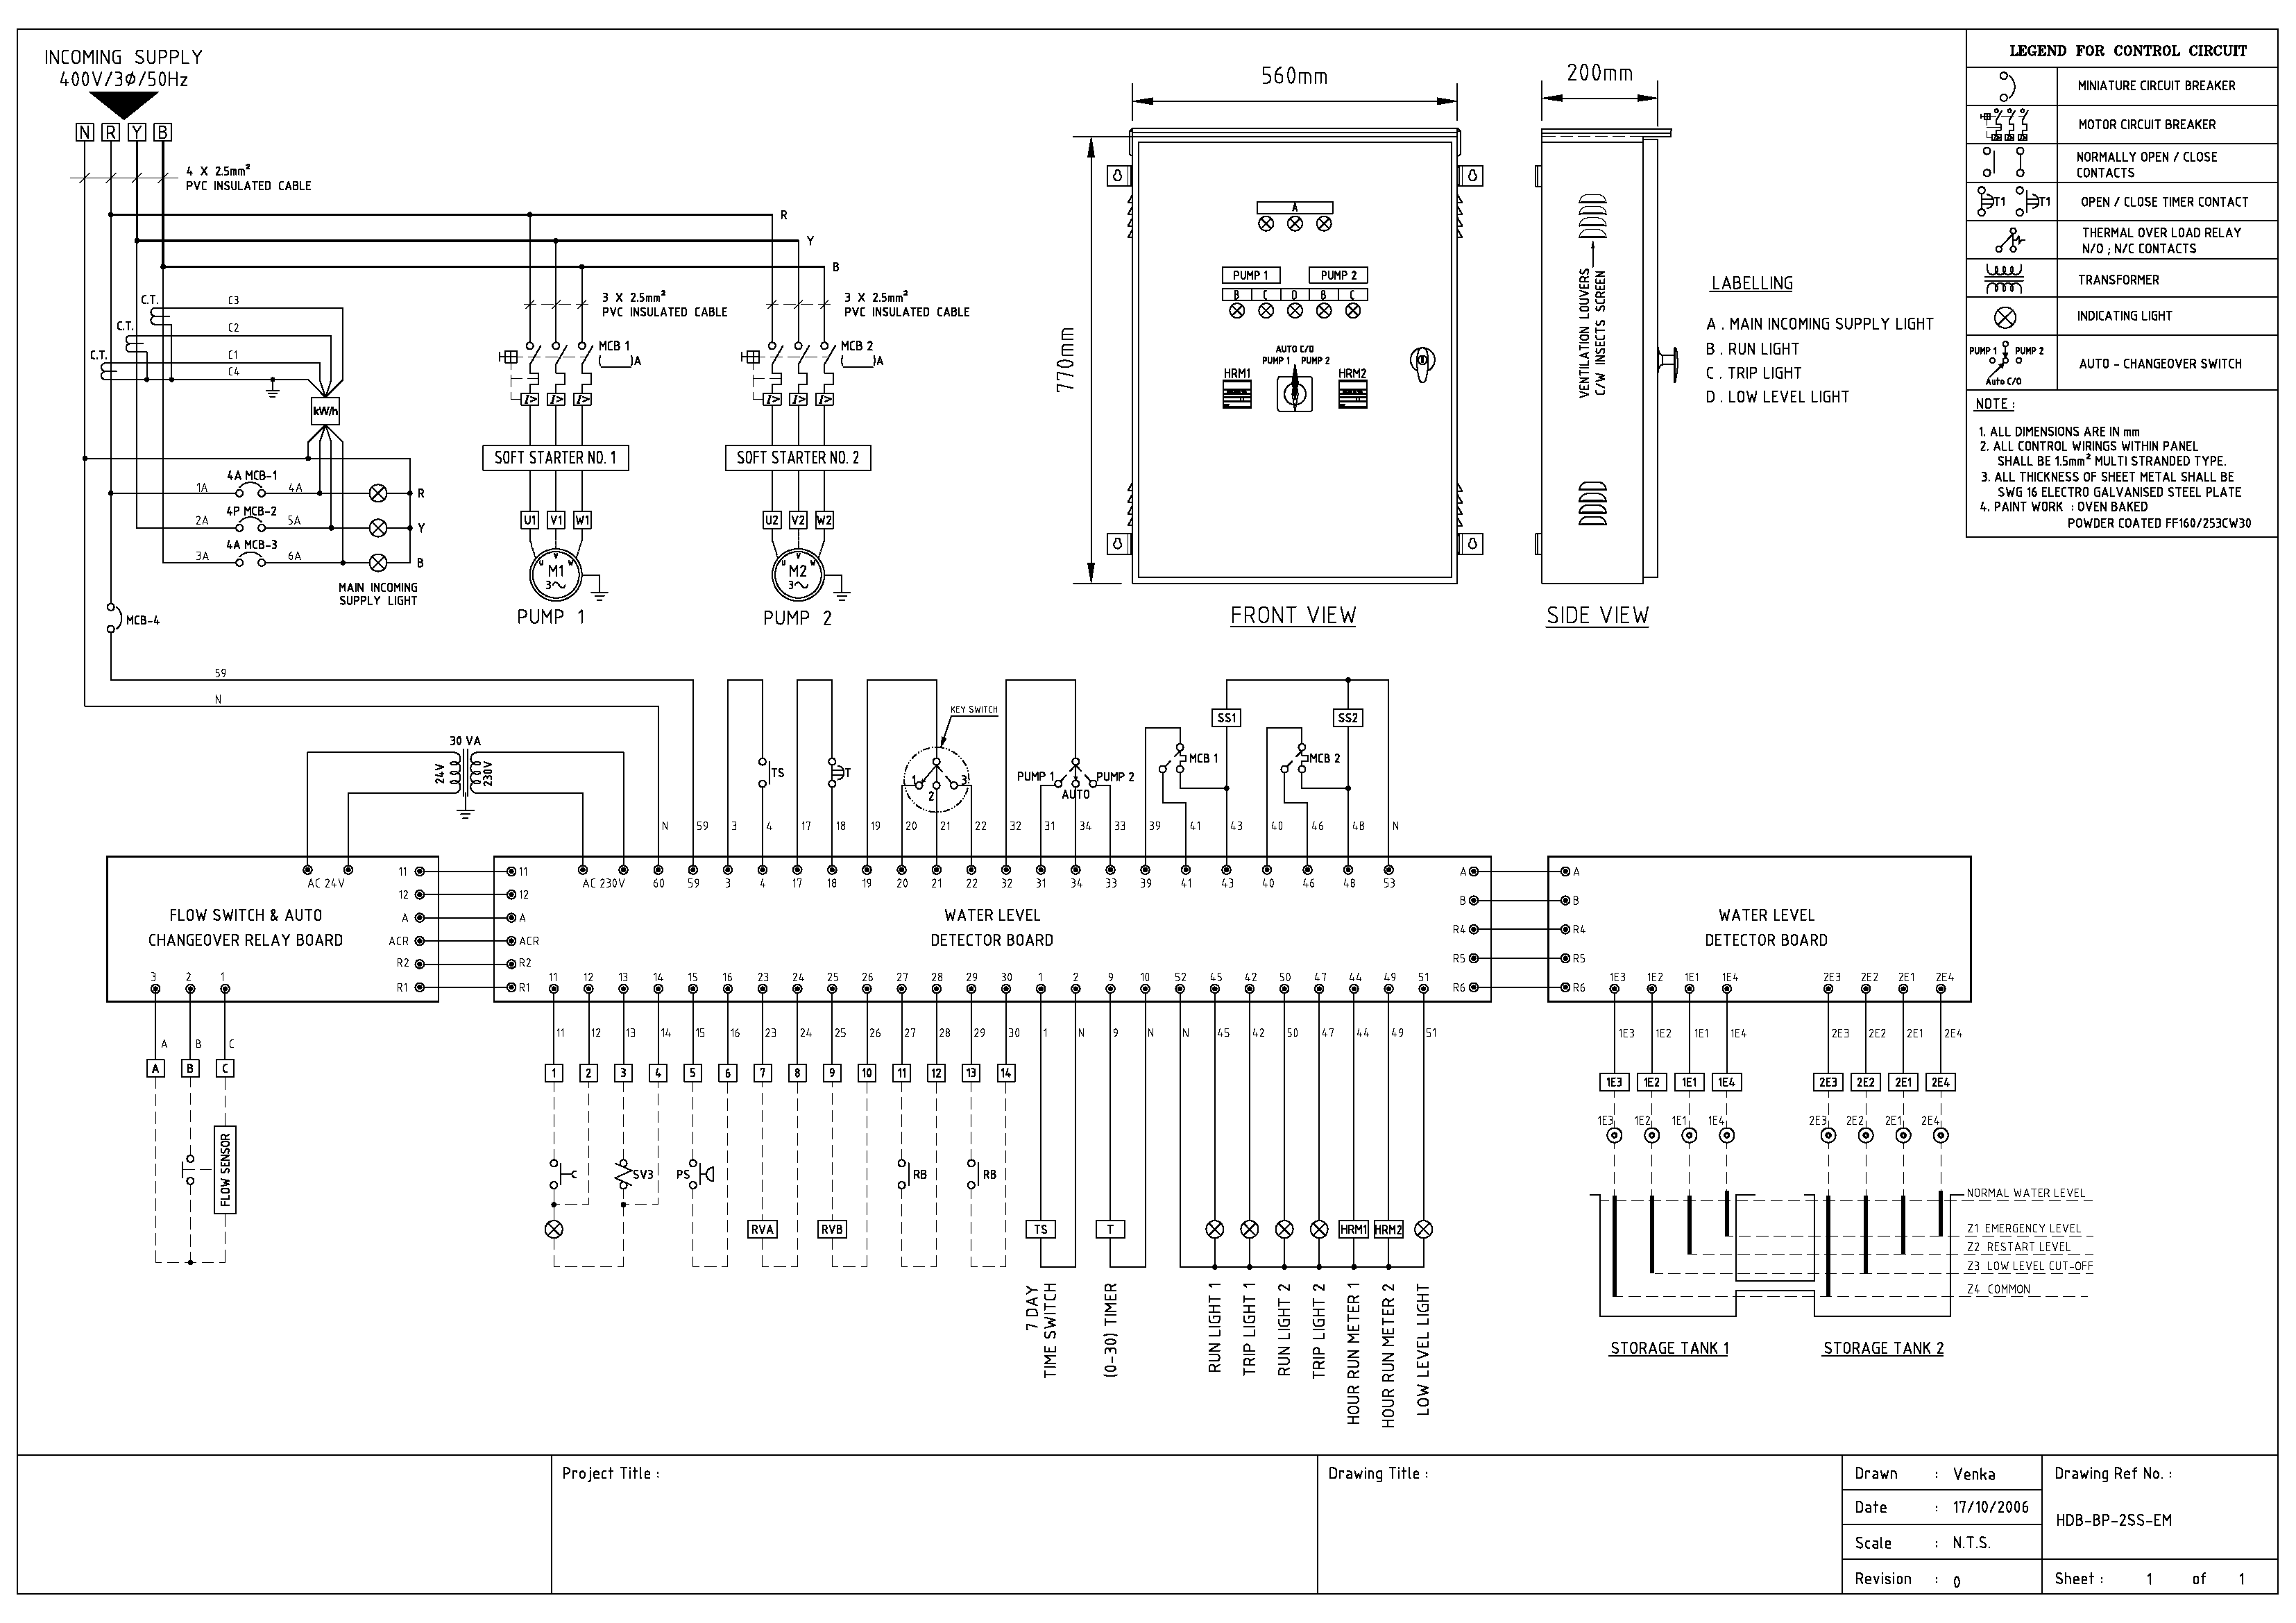 water level detector wiring diagram